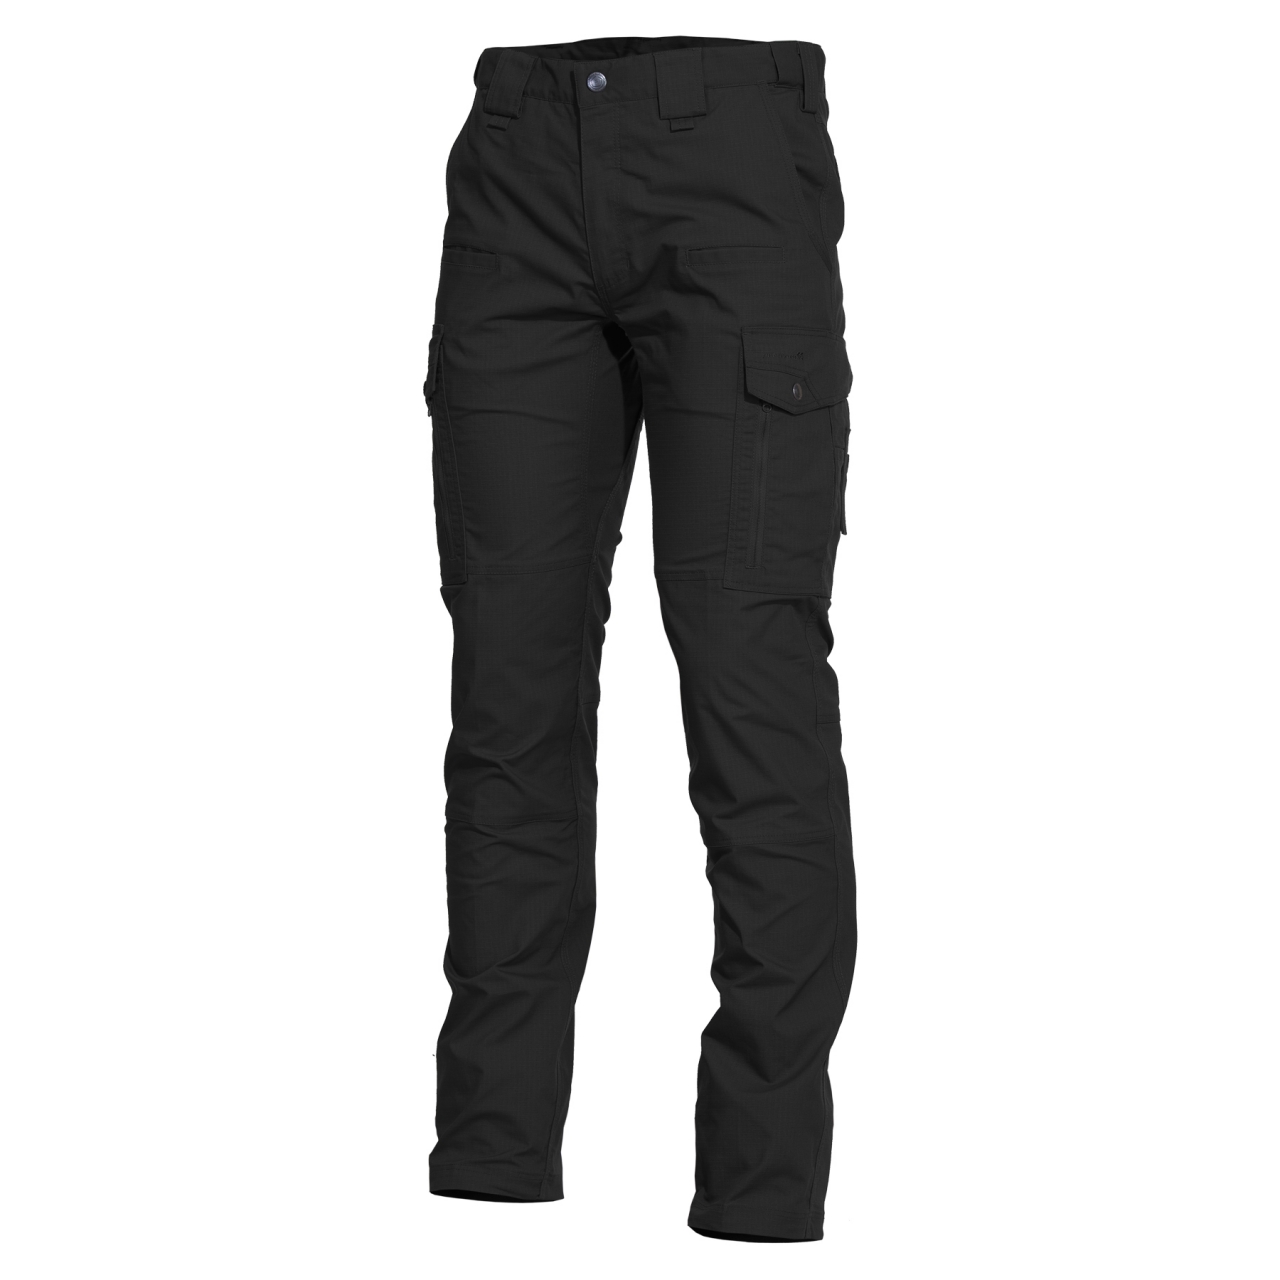 Kalhoty Pentagon Ranger 2.0 - černé, 46 XL